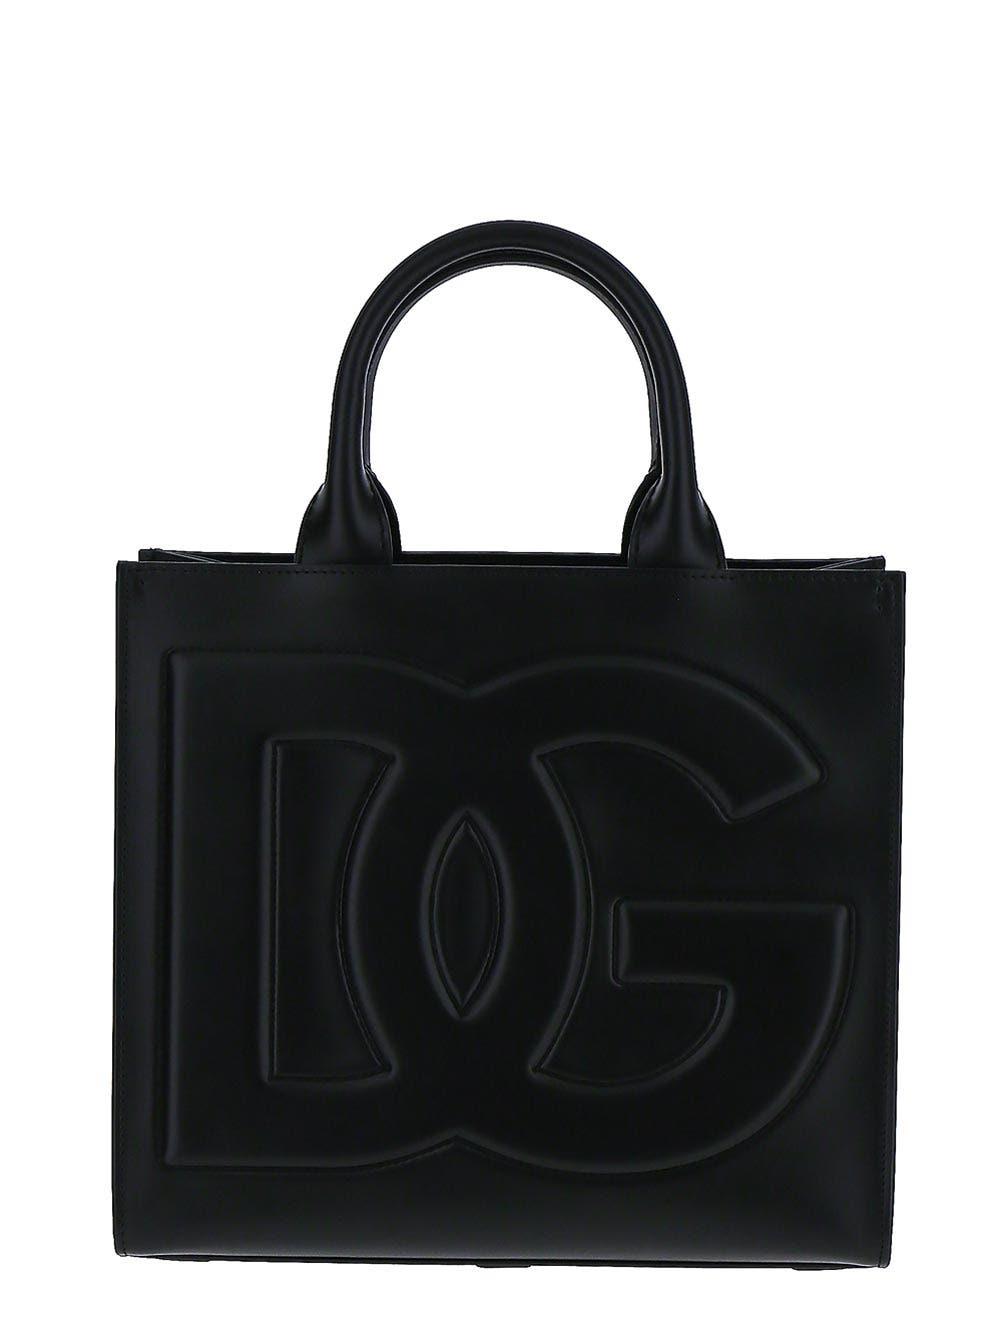 Dolce & Gabbana Logo Embossed Bag in Black | Lyst